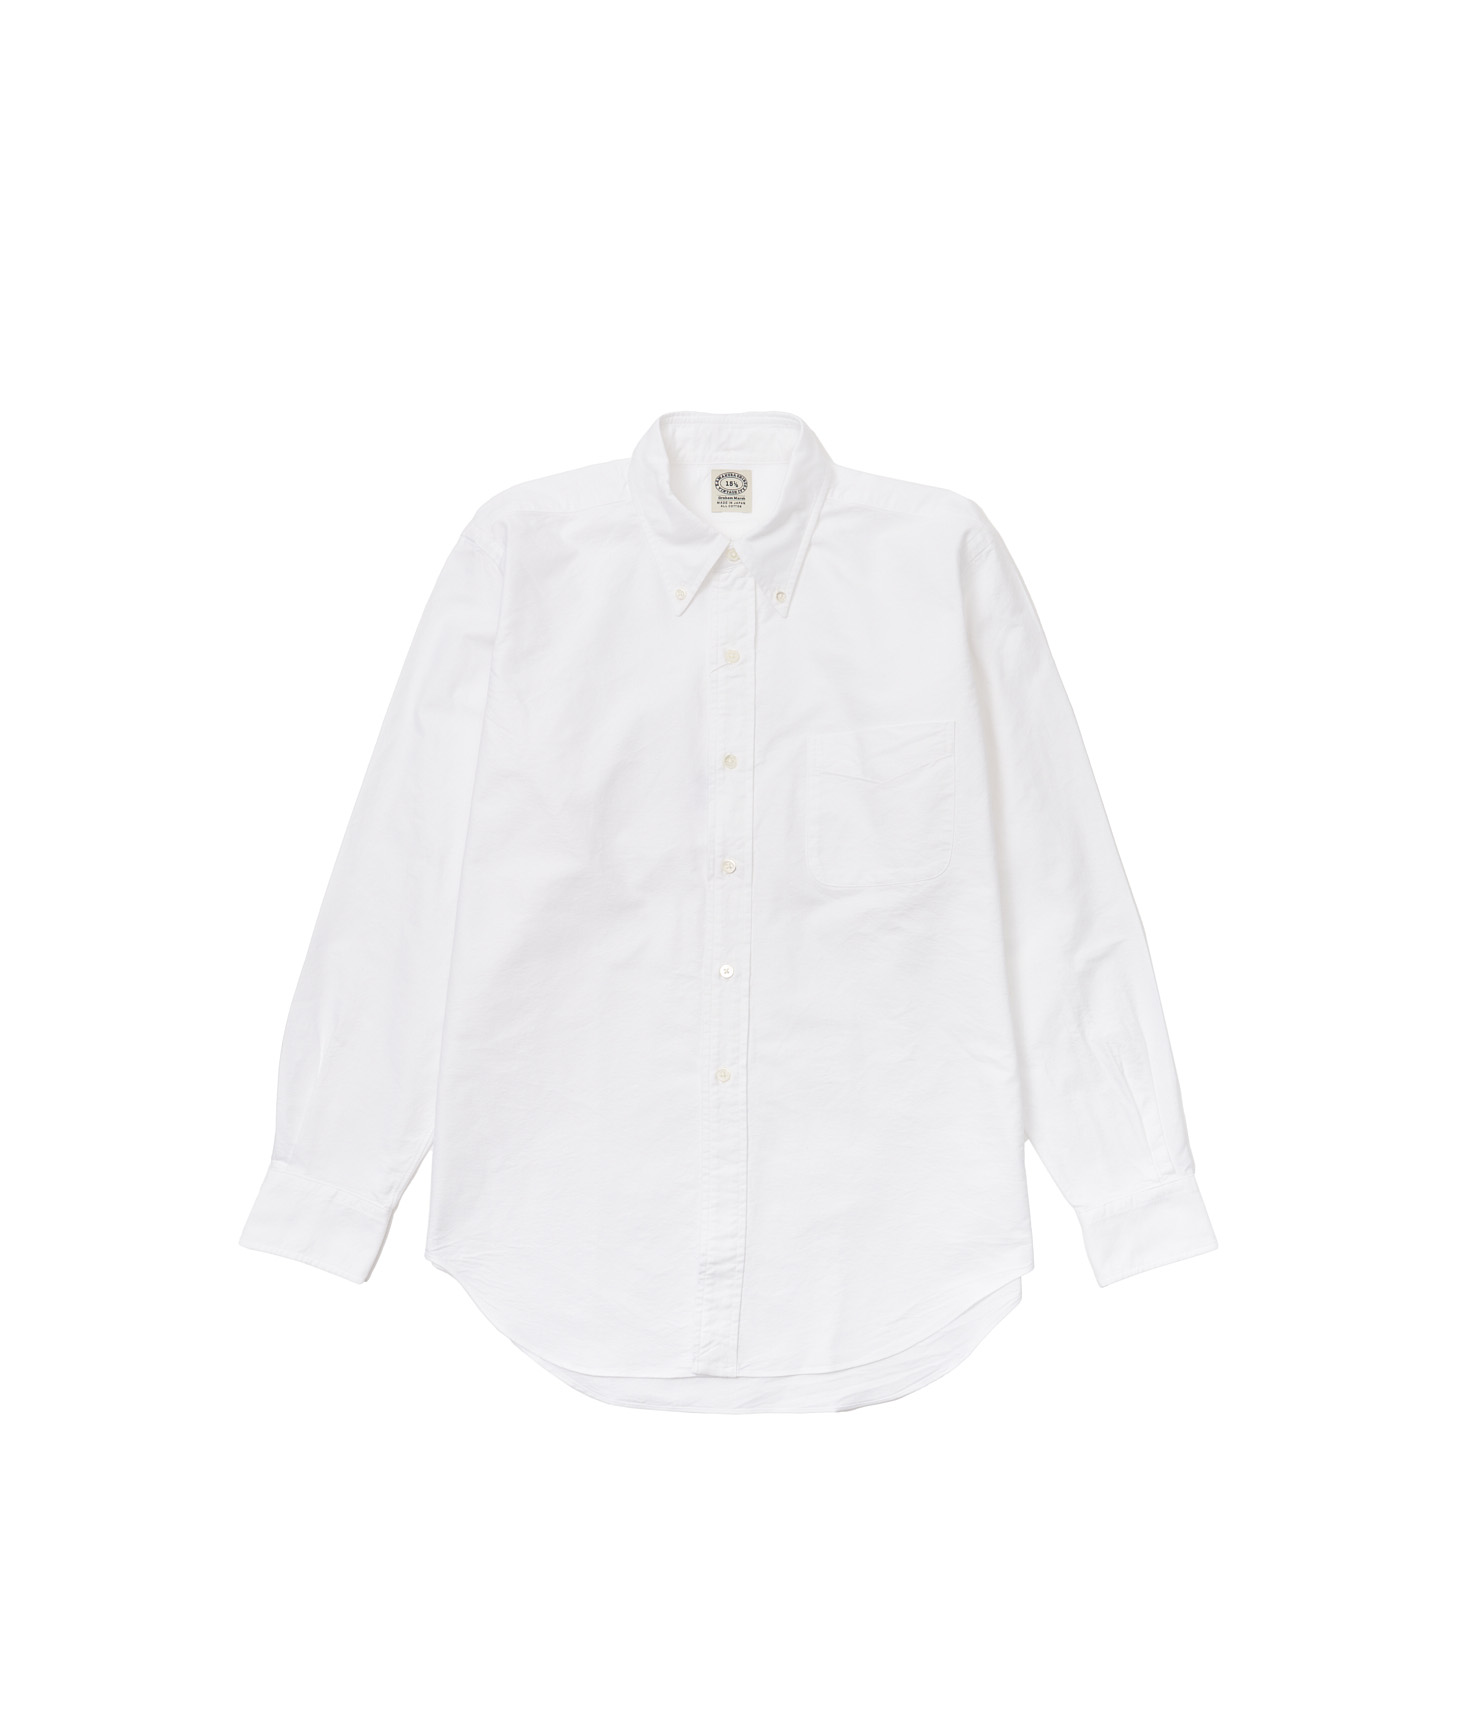 Vintage Ivy Button Down Oxford Shirt White